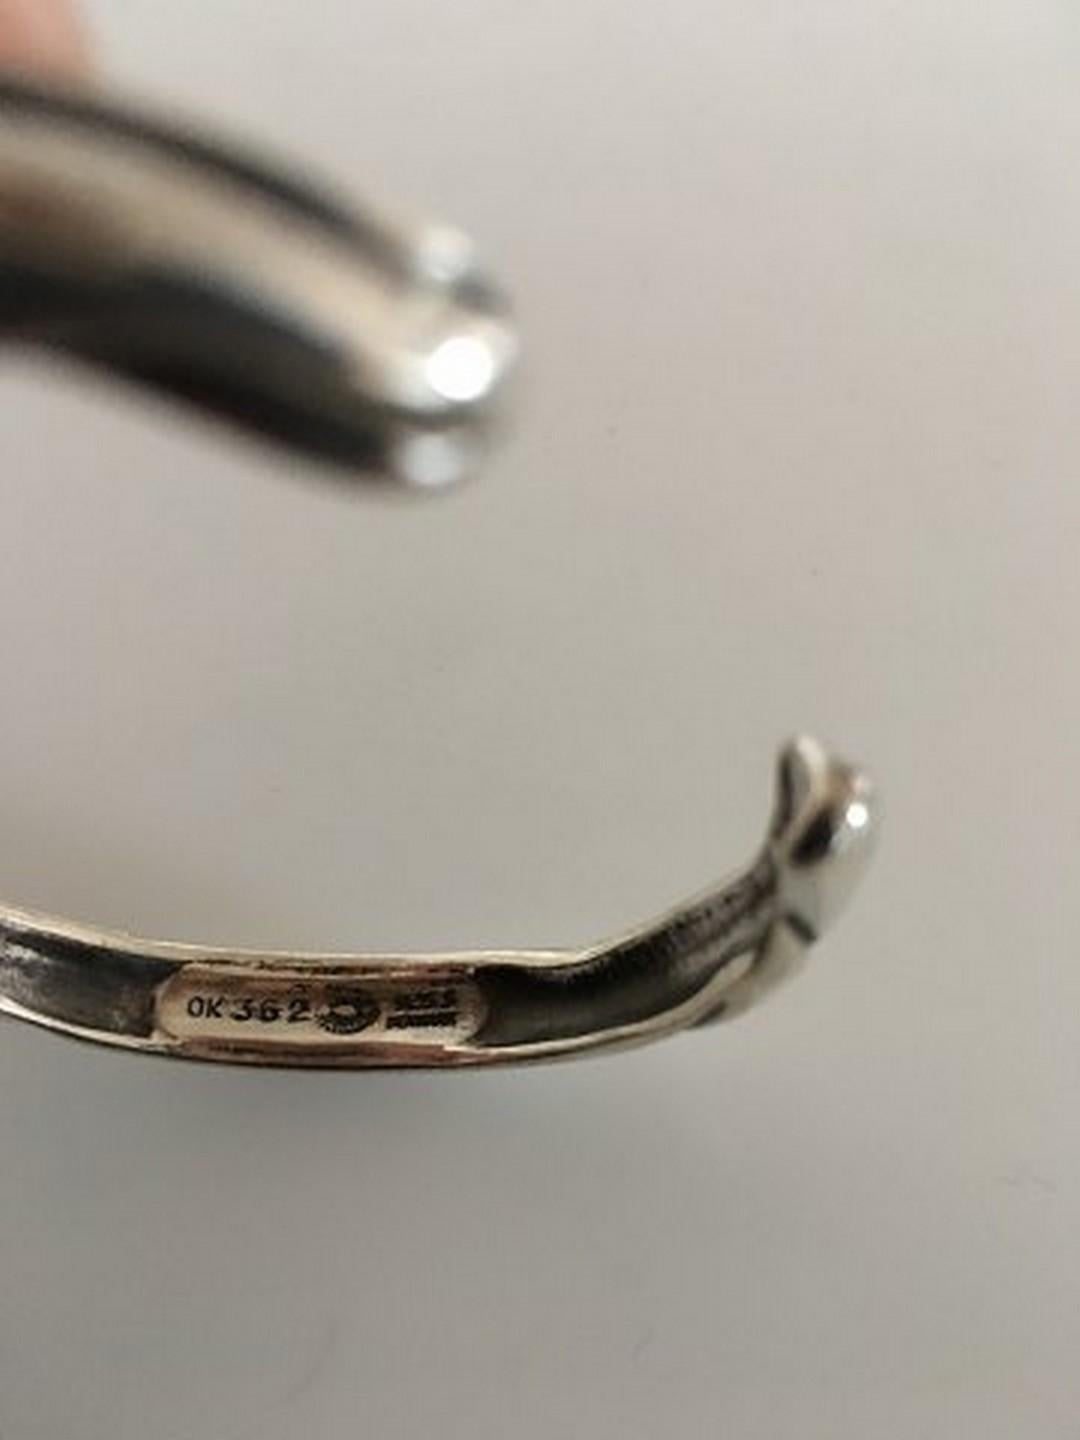 Georg Jensen Sterling Silver Cuff/Bracelet #362 by Ole Kortzau. Measures 5.2 cm / 2 3/64 in. inner diameter. Weighs 25 g / 0.90 oz. In great condition